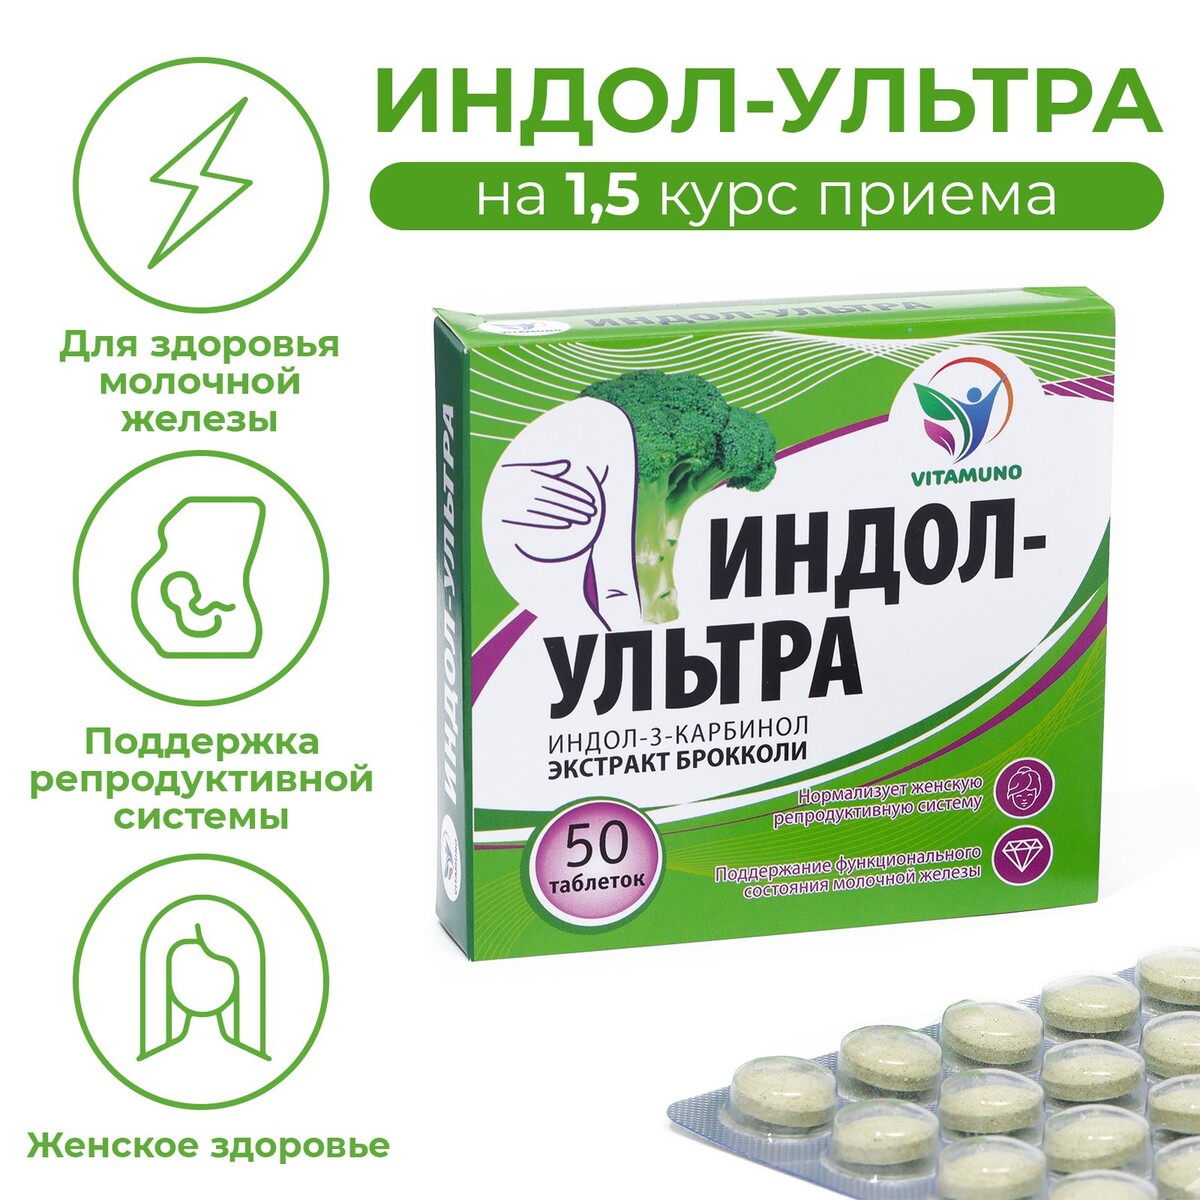 Индол-ультра, 50 таблеток по 500 мг, женское здоровье elentra nutrition индол з карбинол капс 300мг 60 бад